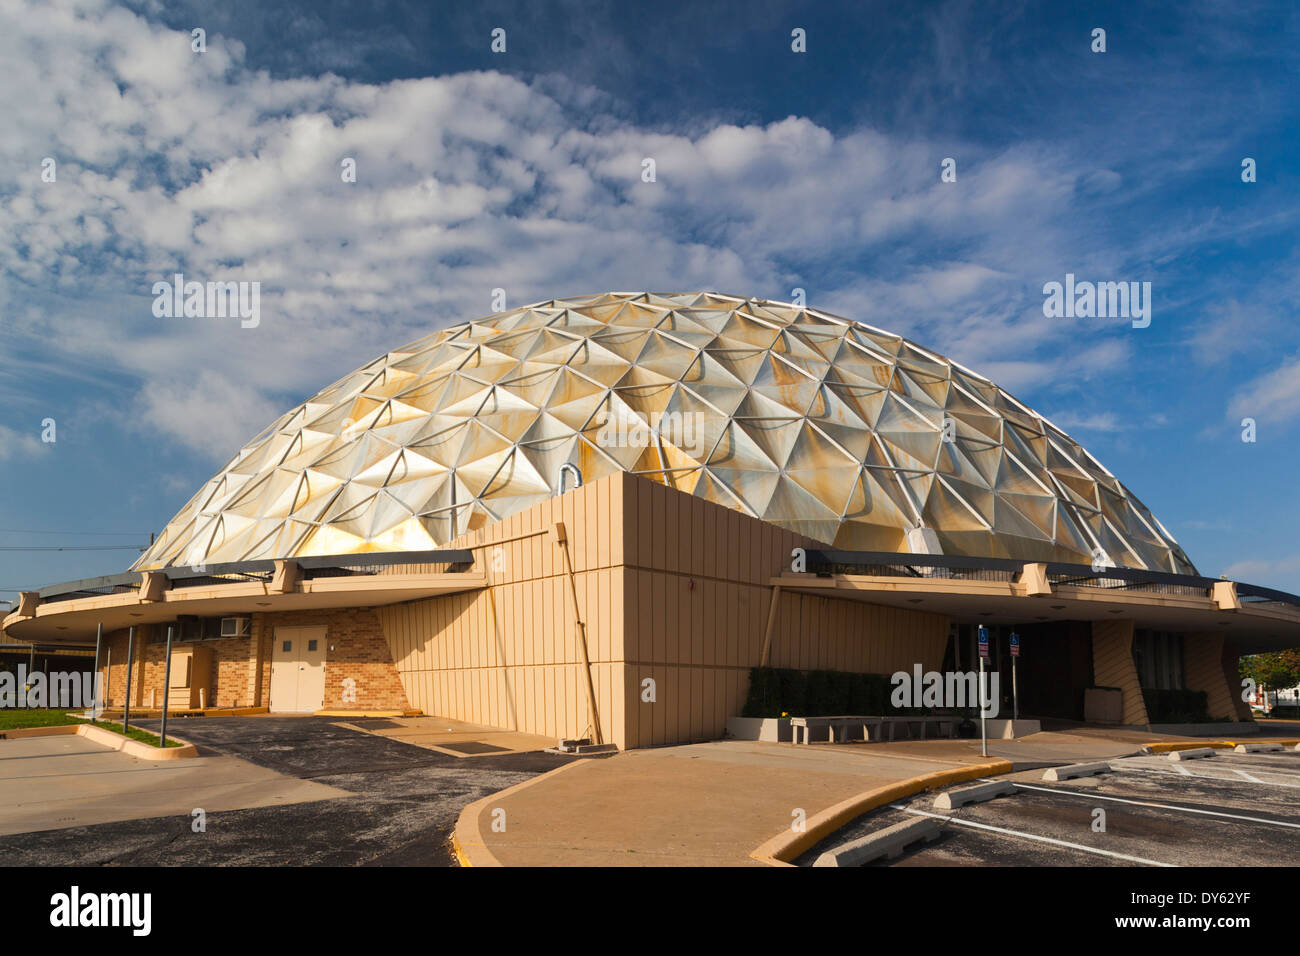 USA, Oklahoma, Oklahoma City, The Gold Dome Building Stock Photo